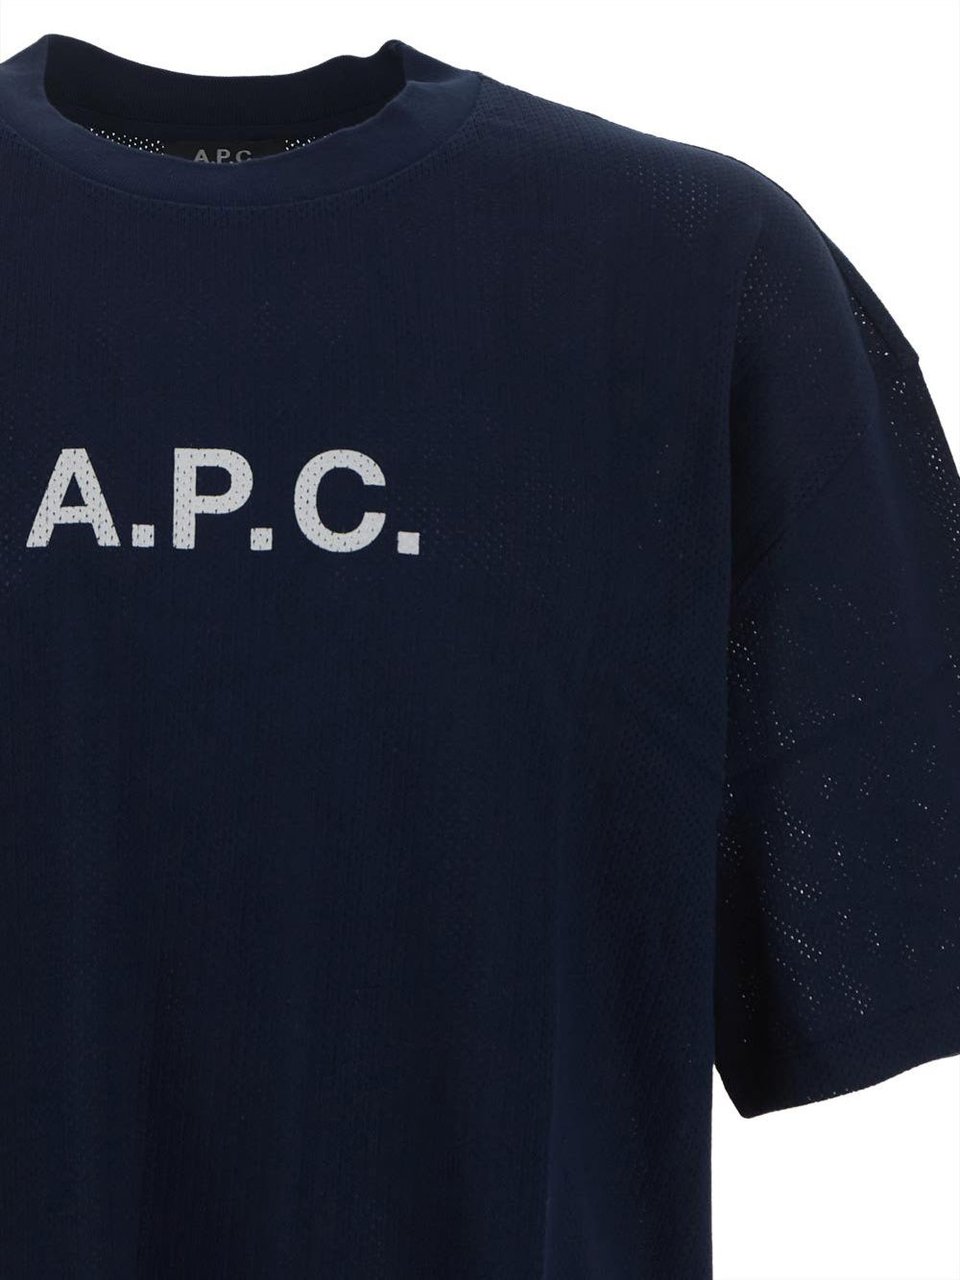 A.P.C. Moran T-Shirt Blauw